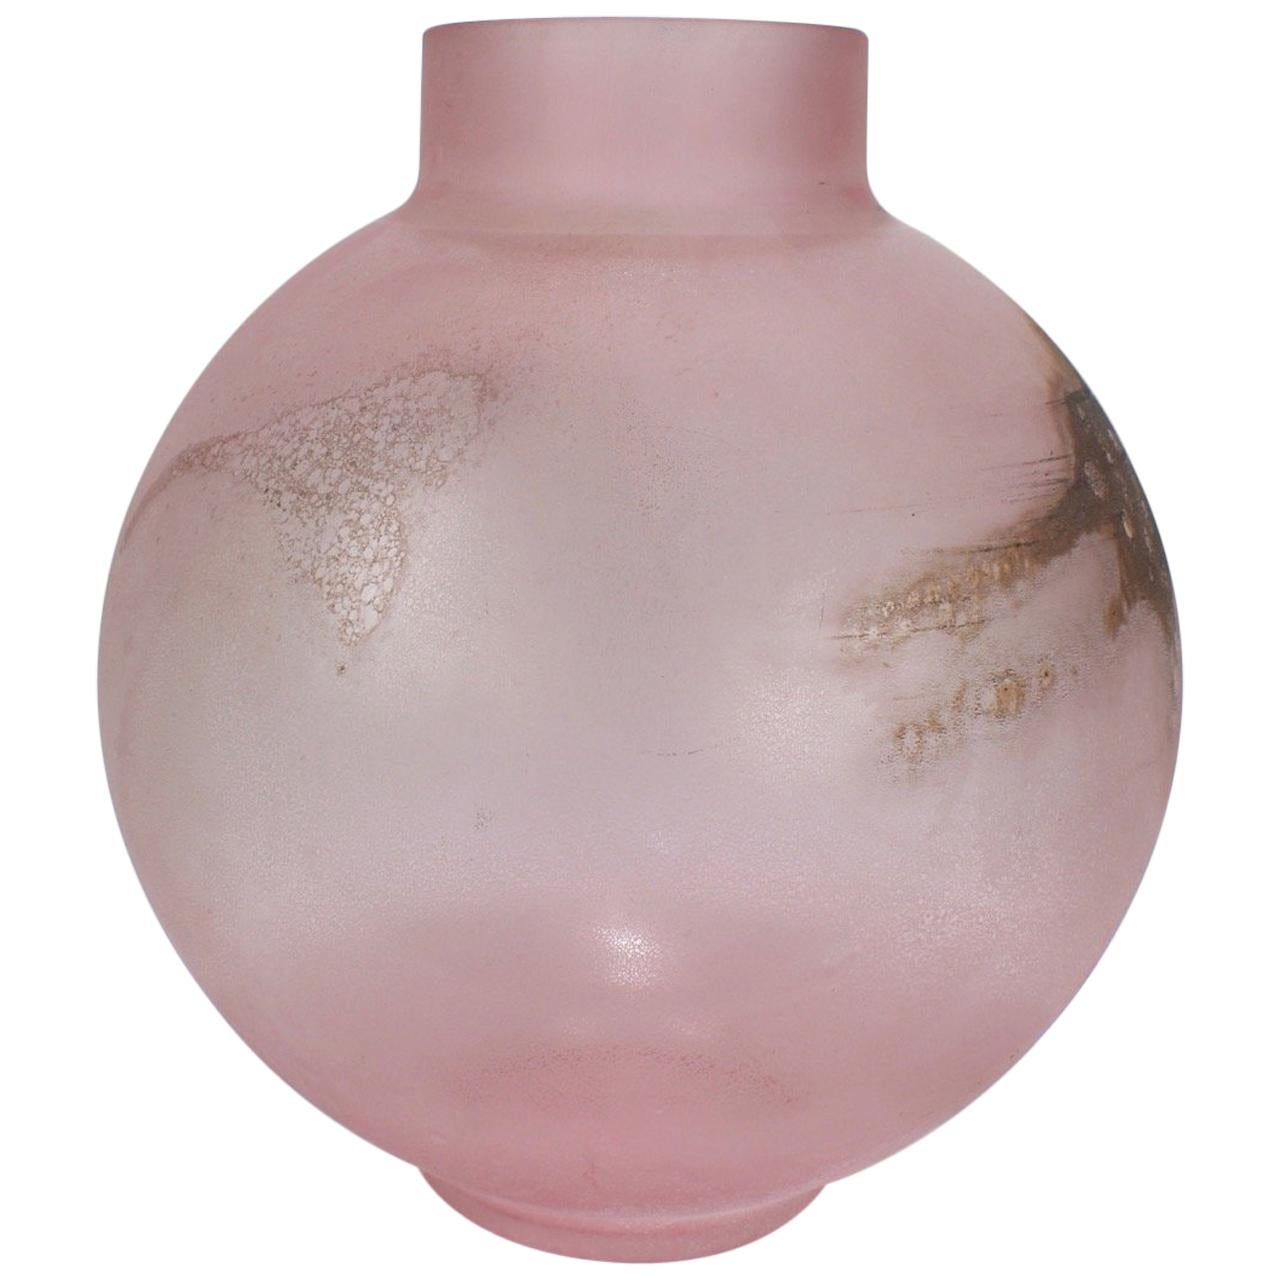 Grand vase en verre de Murano en forme de globe ou sphérique Scavo rose de Cenedese